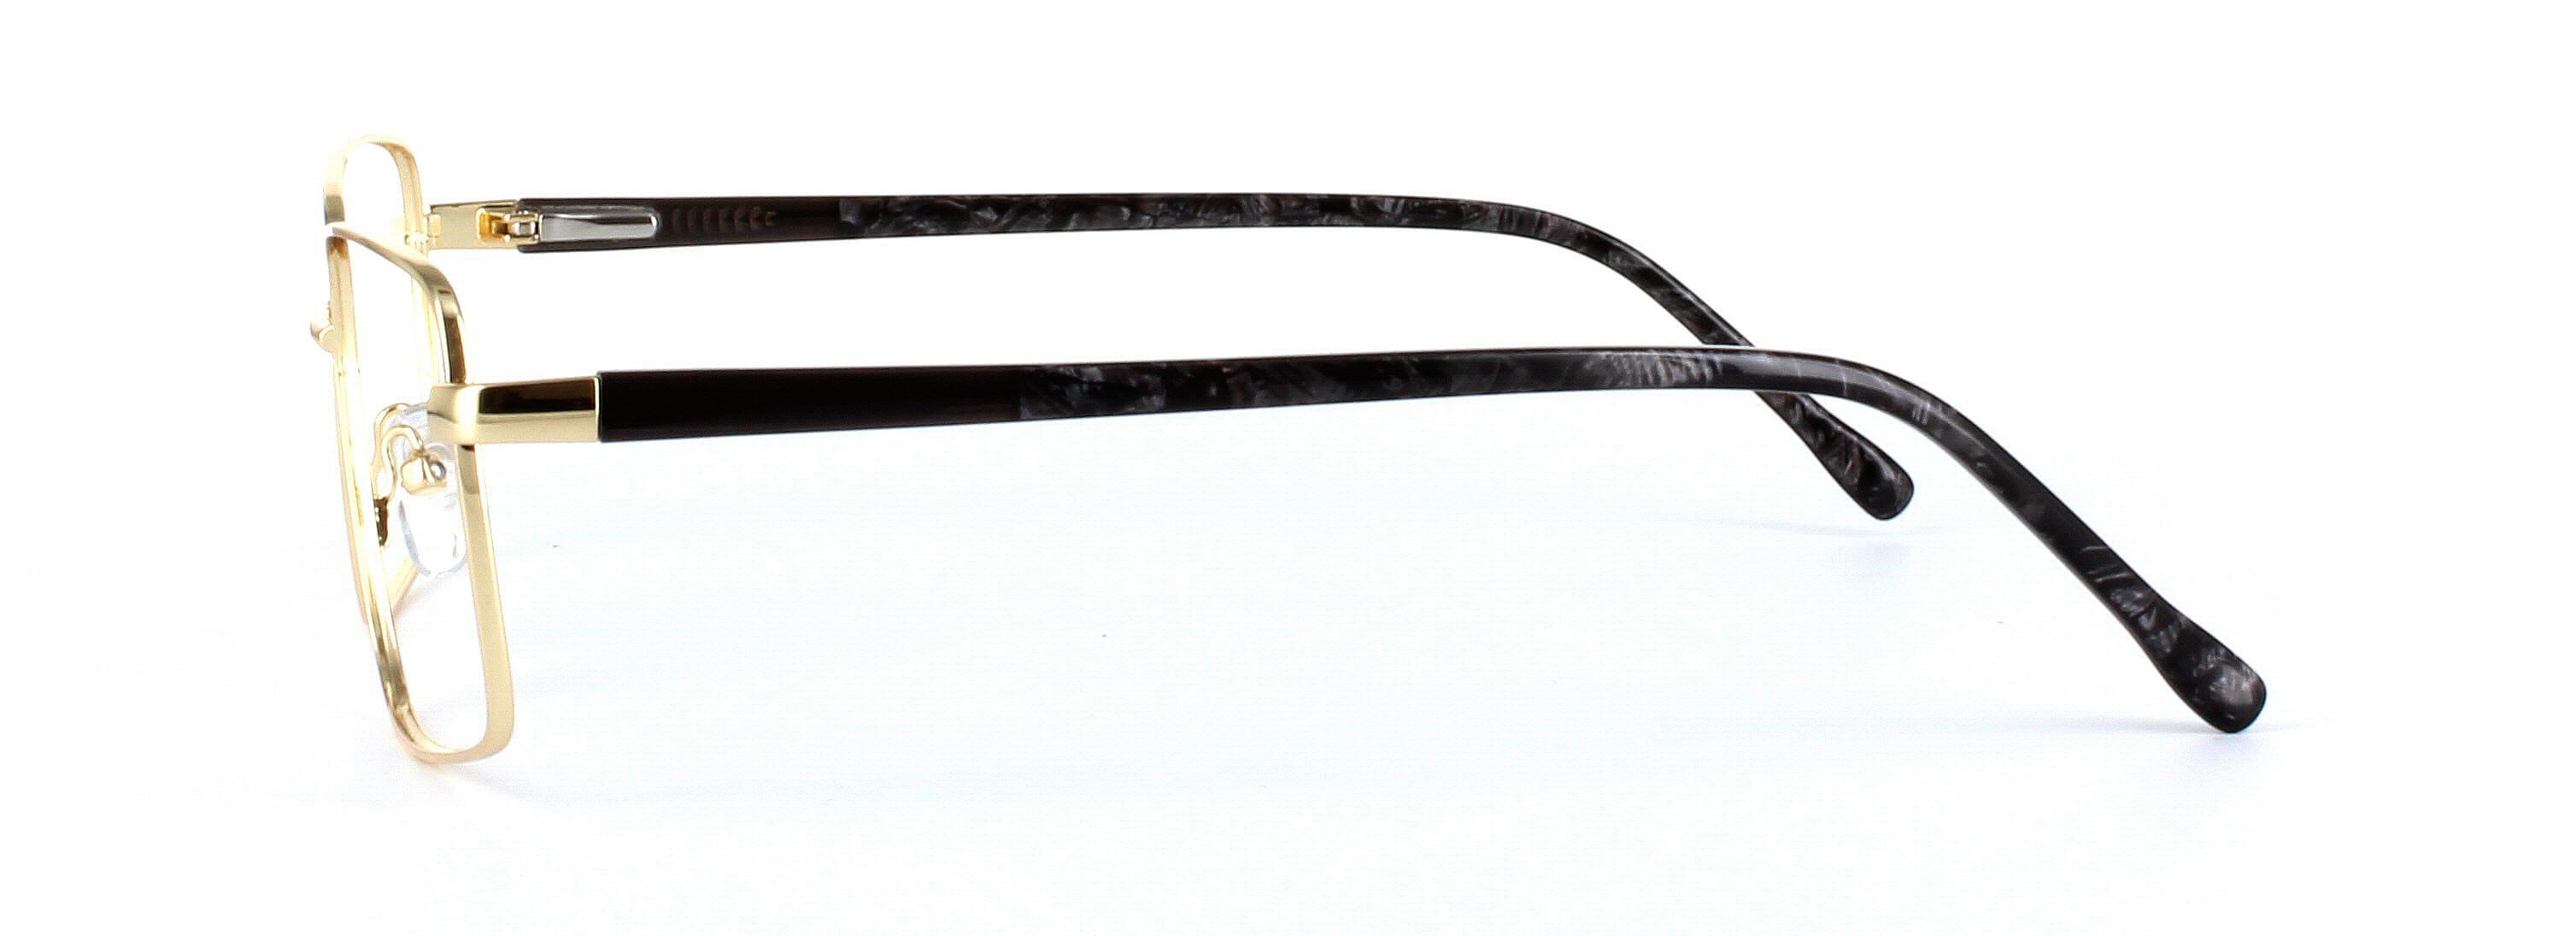 Marlborough Gold Full Rim Rectangular Glasses - Image View 2